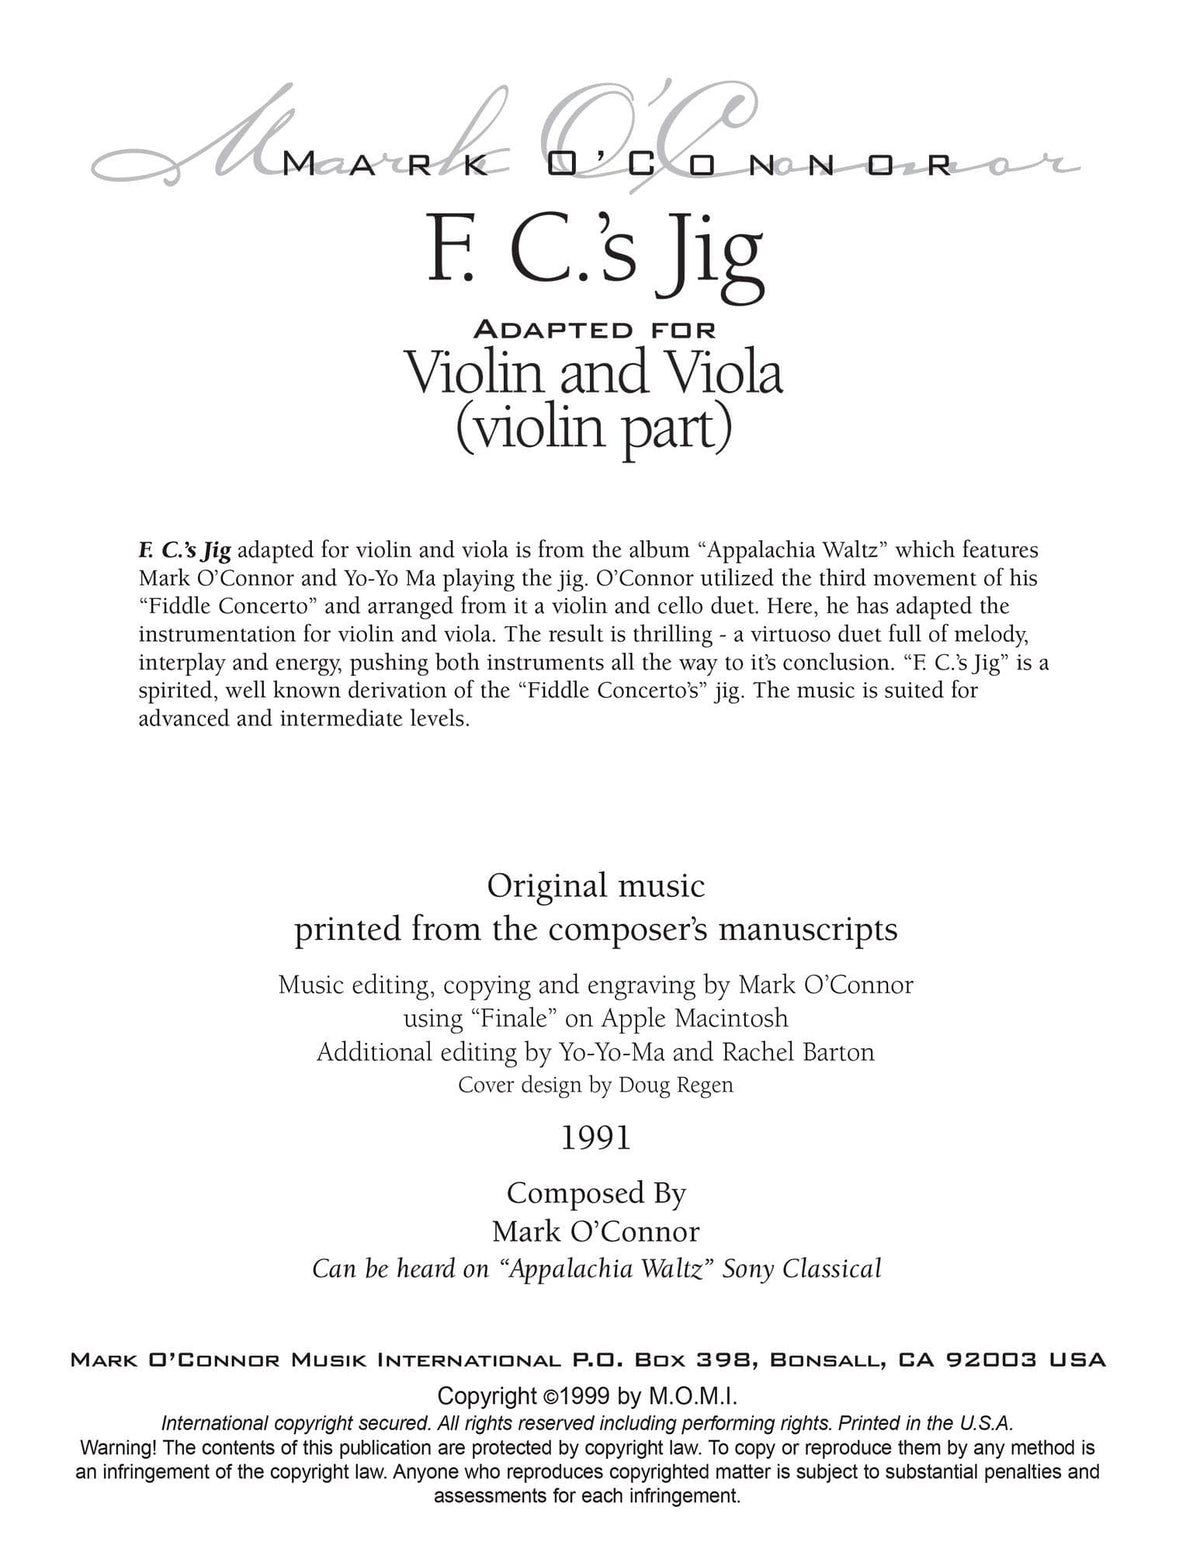 O'Connor, Mark - F.C.'s Jig for Violin and Viola - Violin - Digital Download